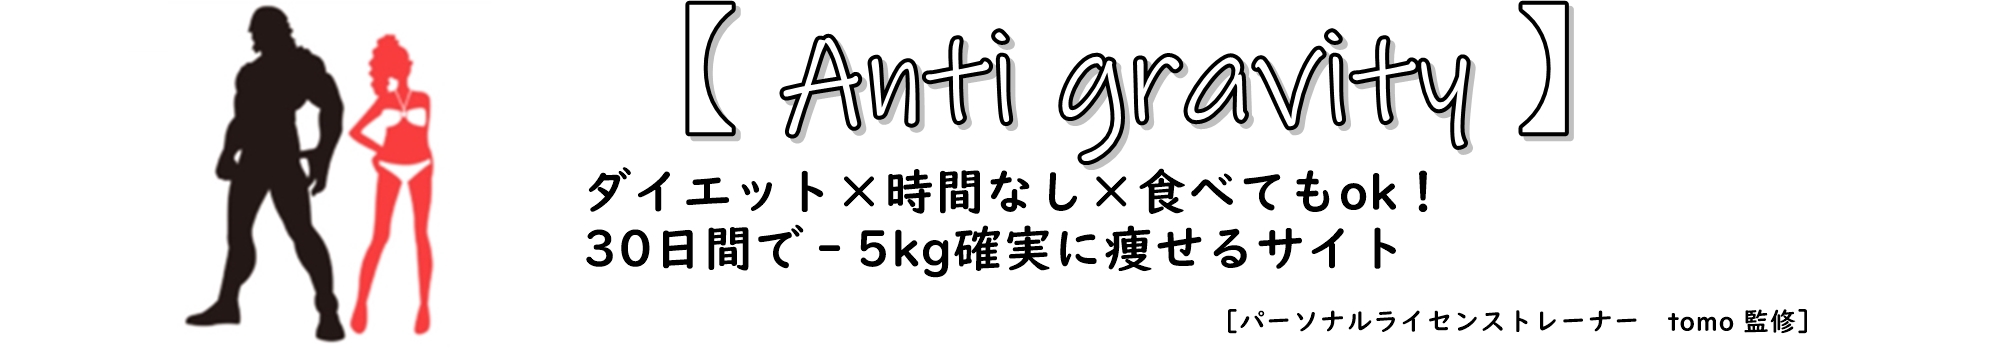 【 Anti gravity 】30日間で‐5kg痩せるサイト。